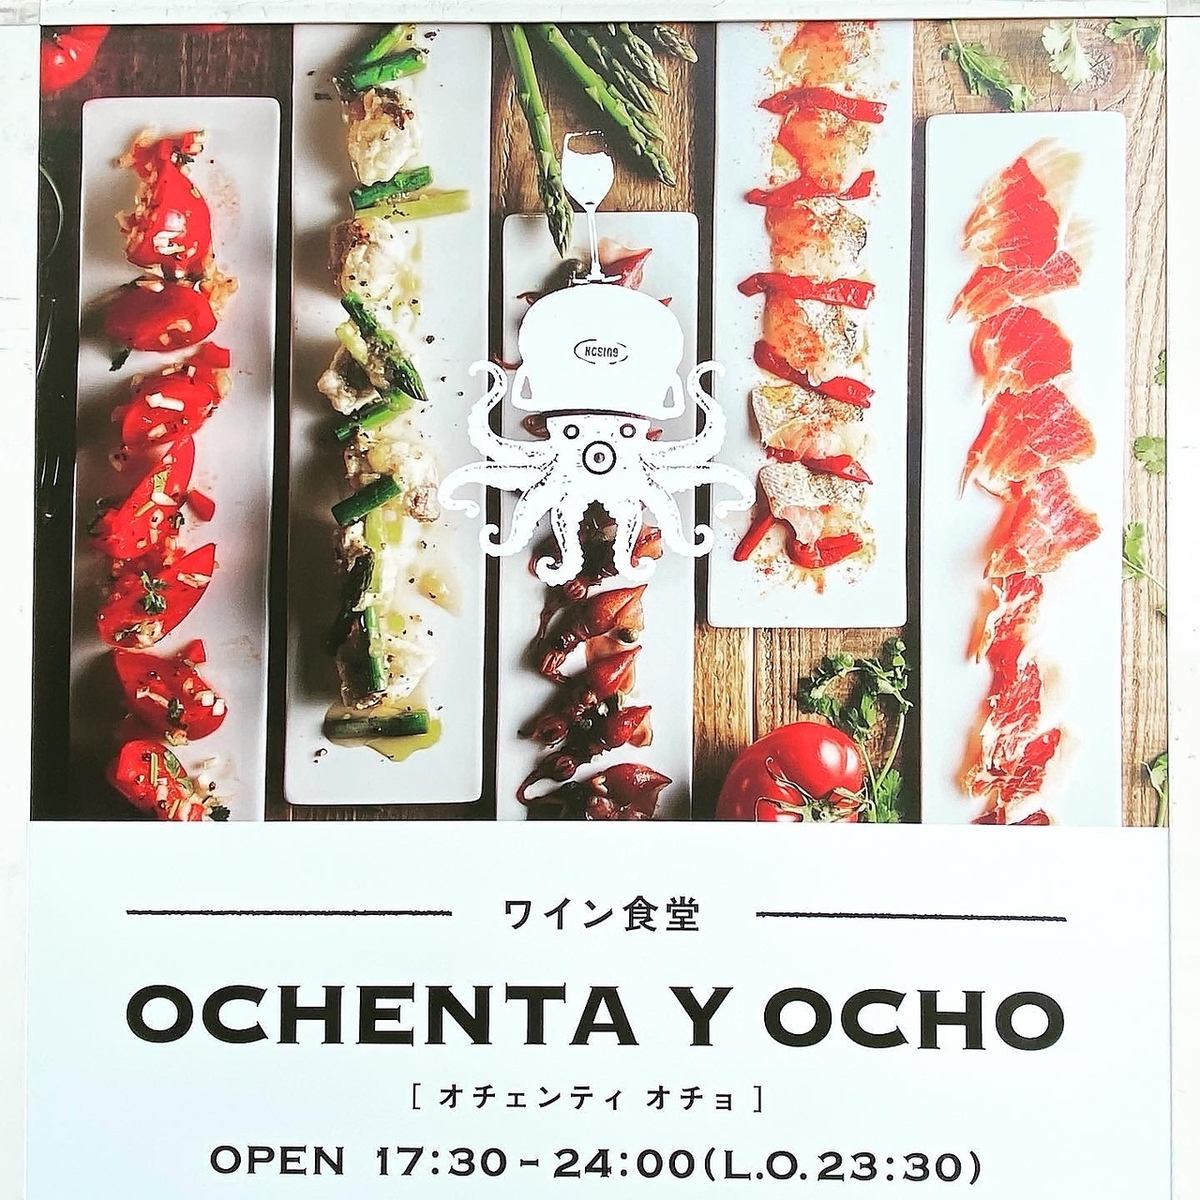 Ochentiocho，一家葡萄酒餐厅，您可以在这里享用传统的西班牙美食